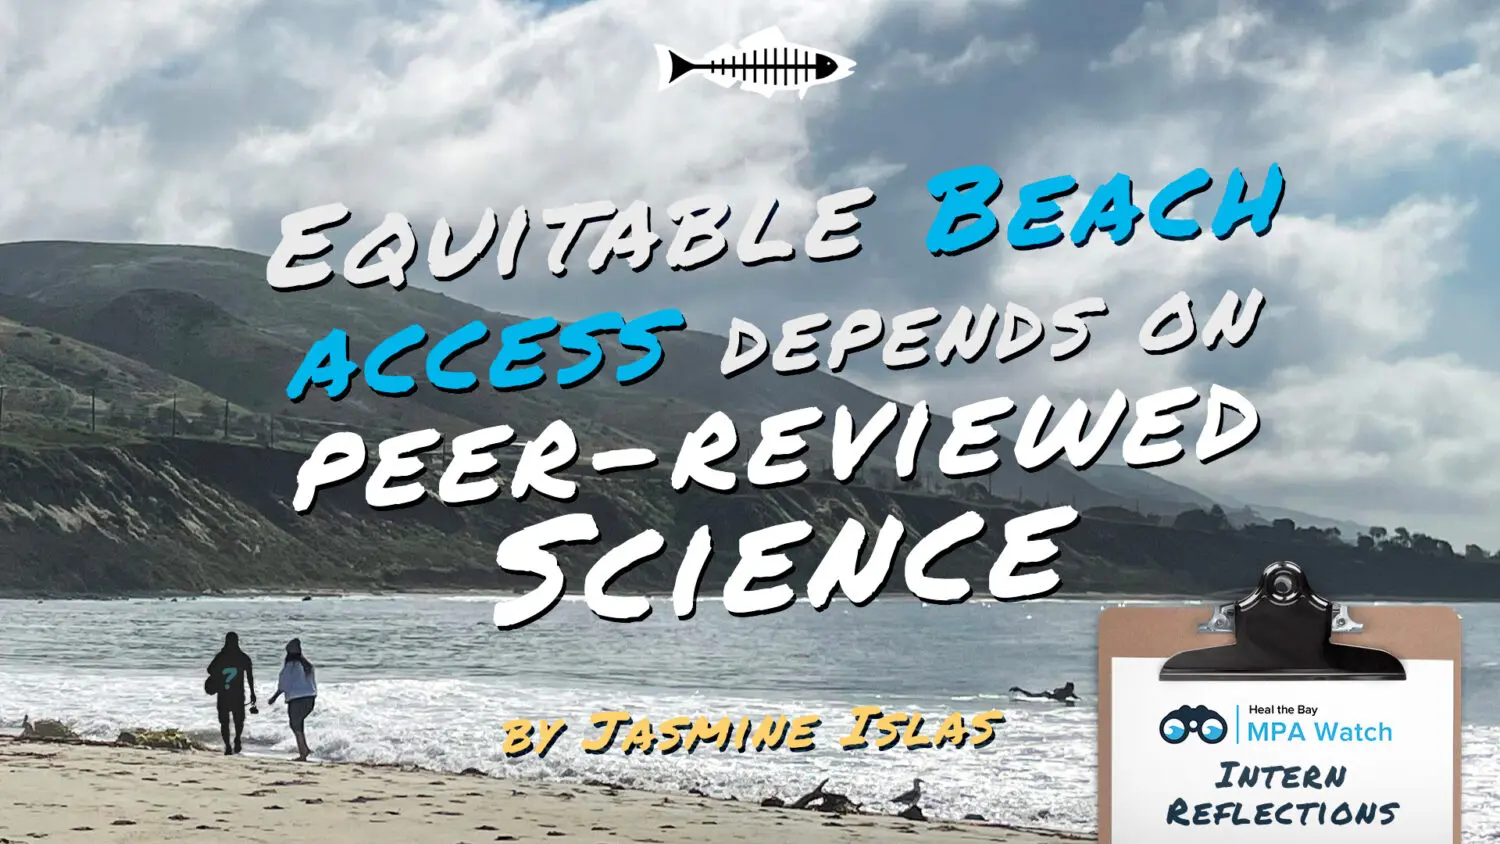 Zuma Beach Biodiversity – The Beach